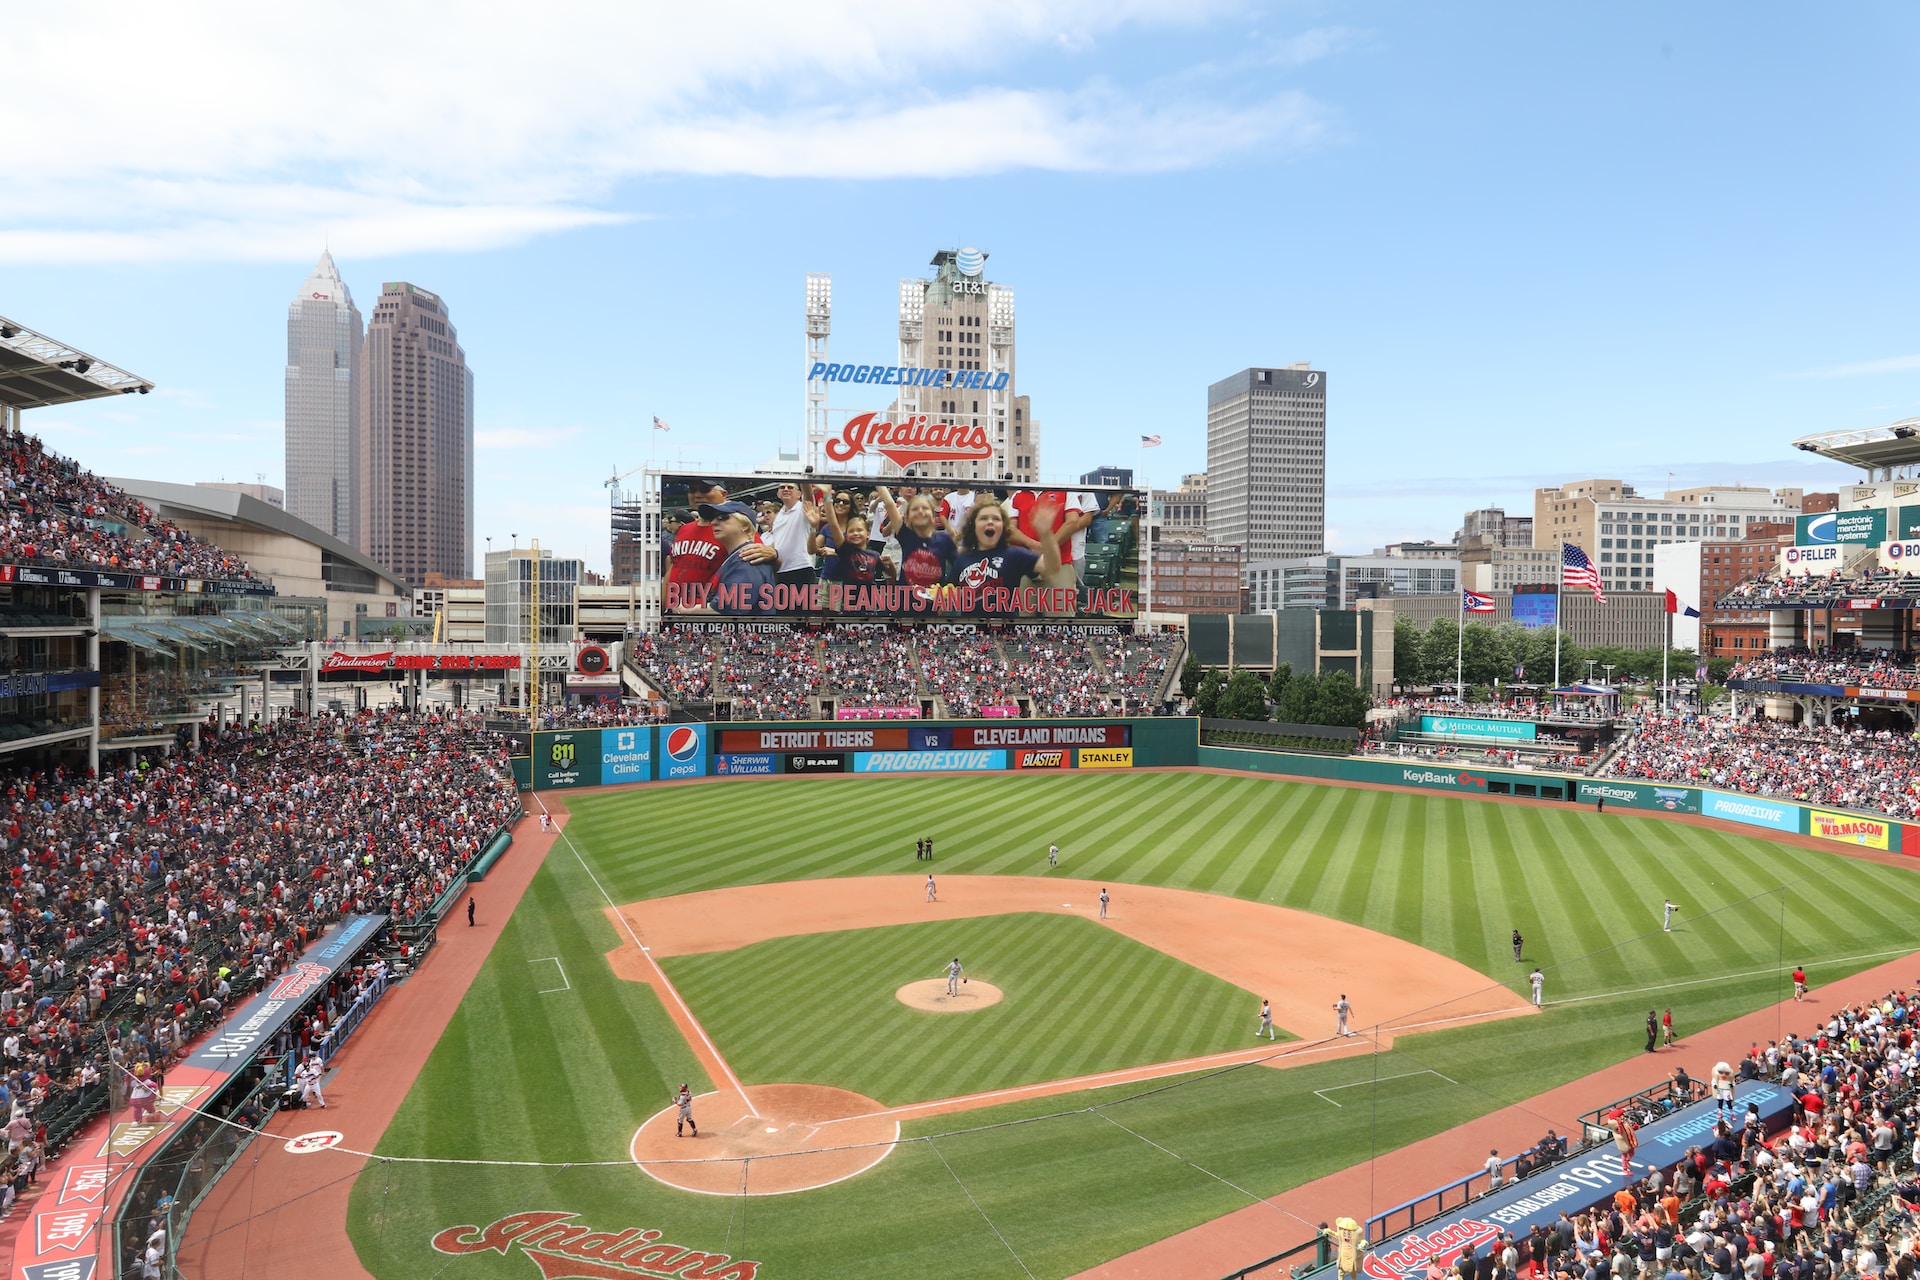 A photograph of Progressive Field's baseball diamond, with the scoreboard in the background.